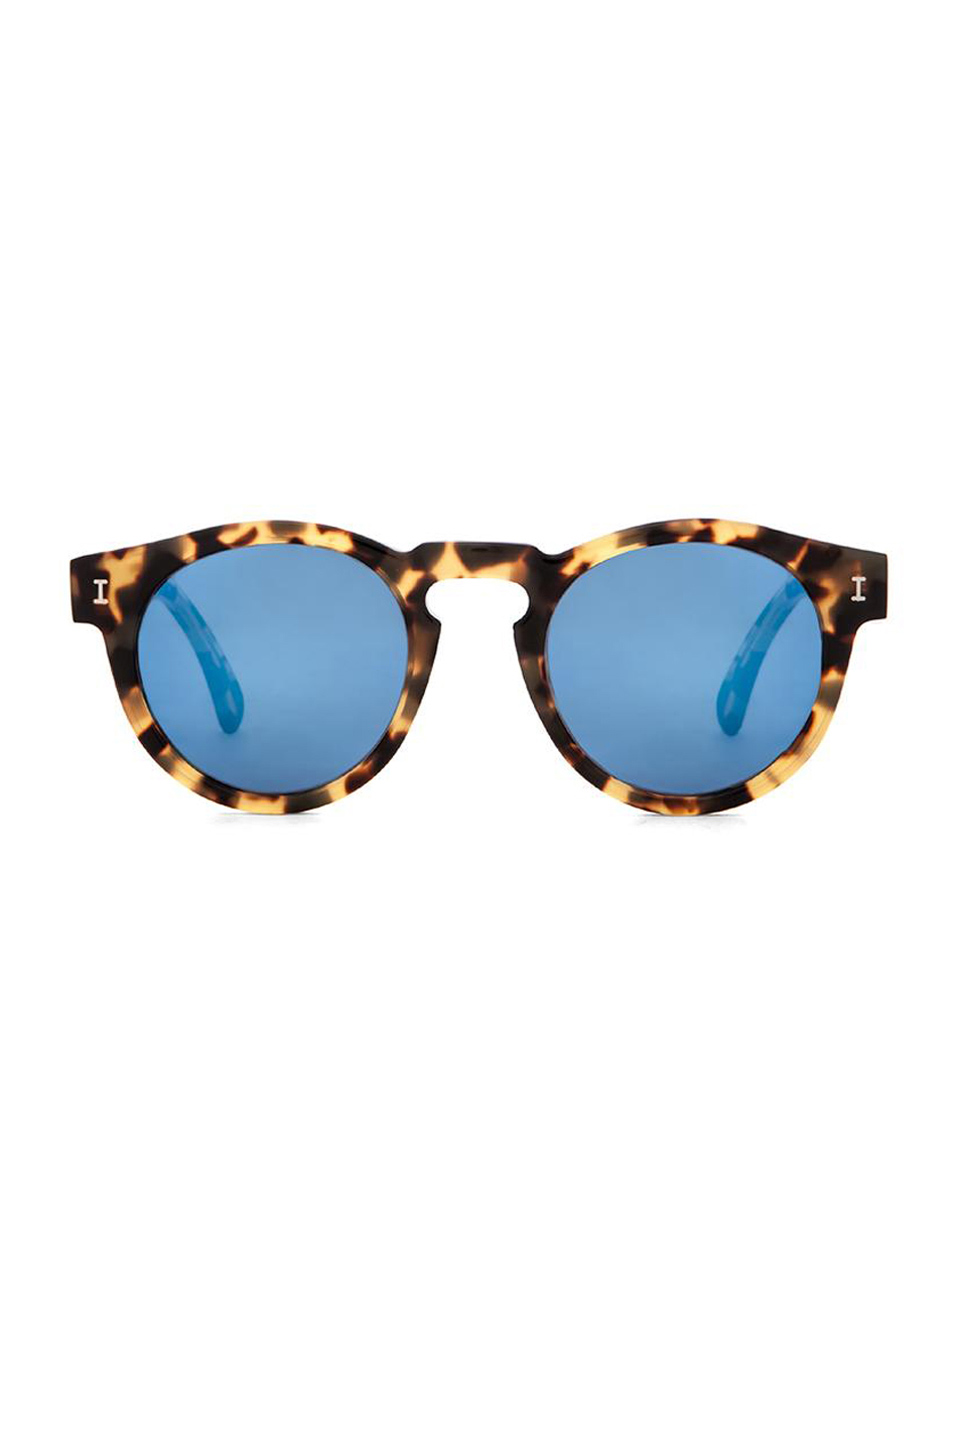 Blue and Tortoise Sunglasses.jpg